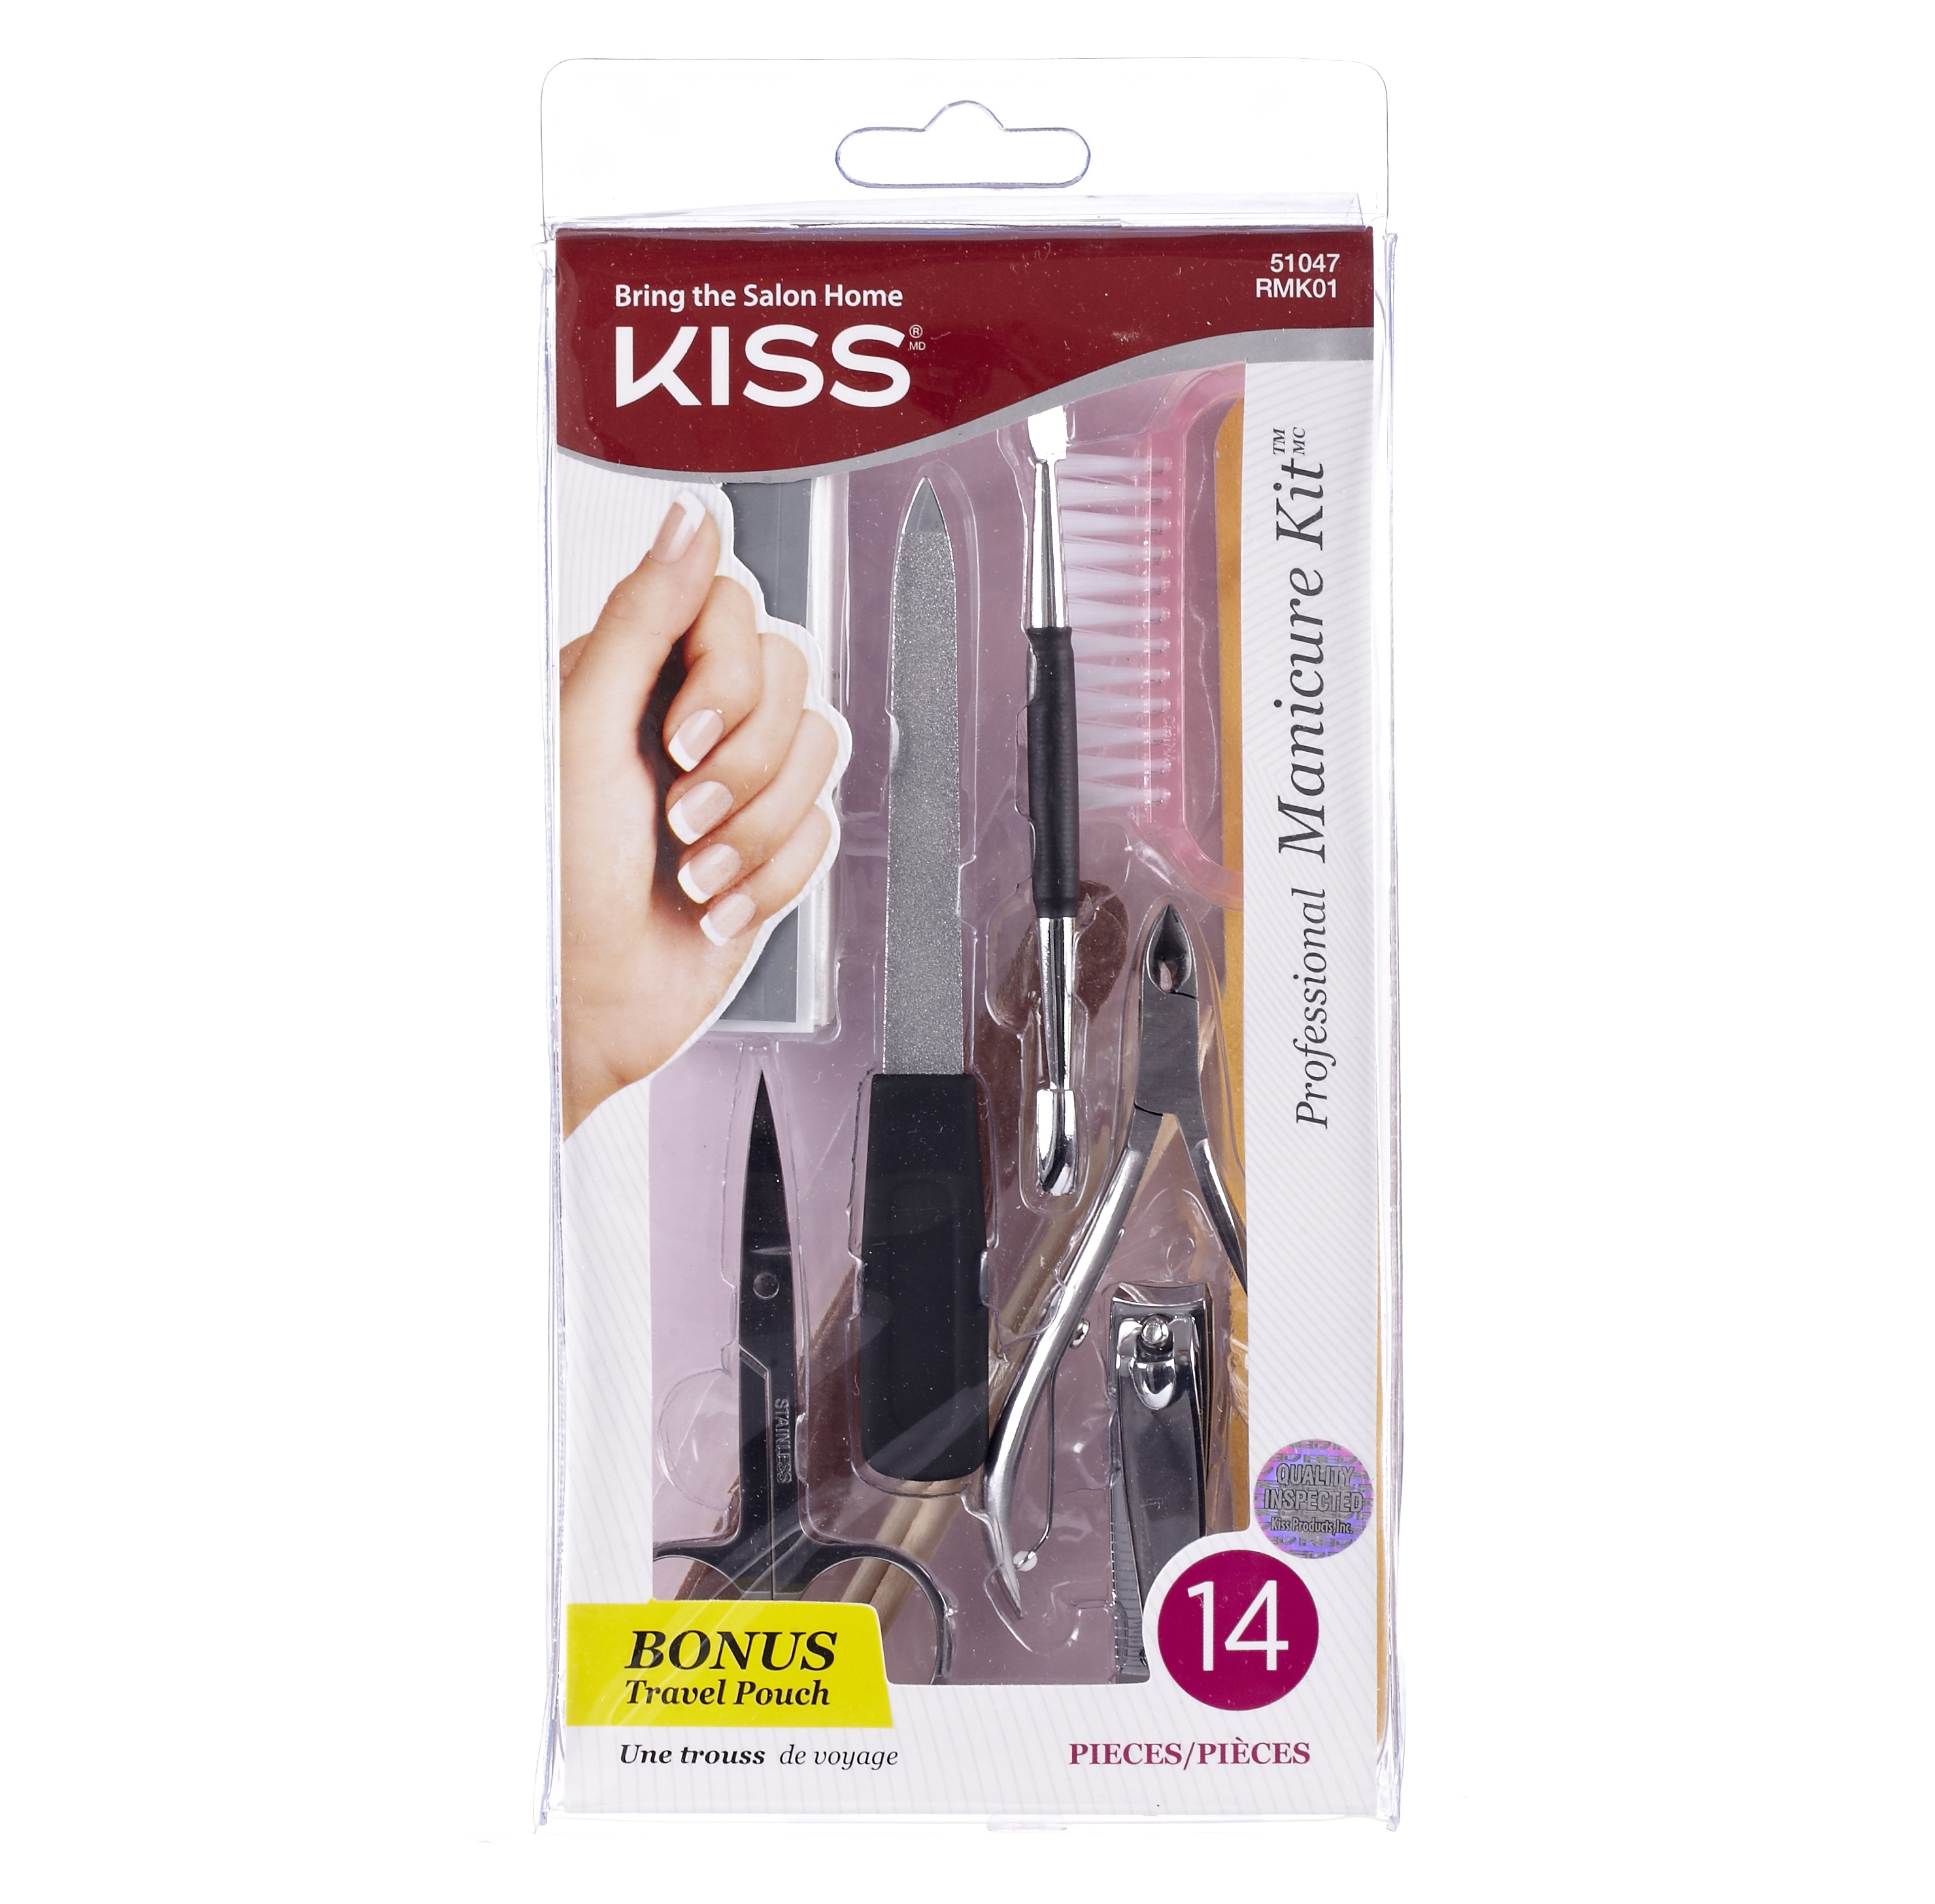 Kiss Manicure Kit, Professional, 1 kit